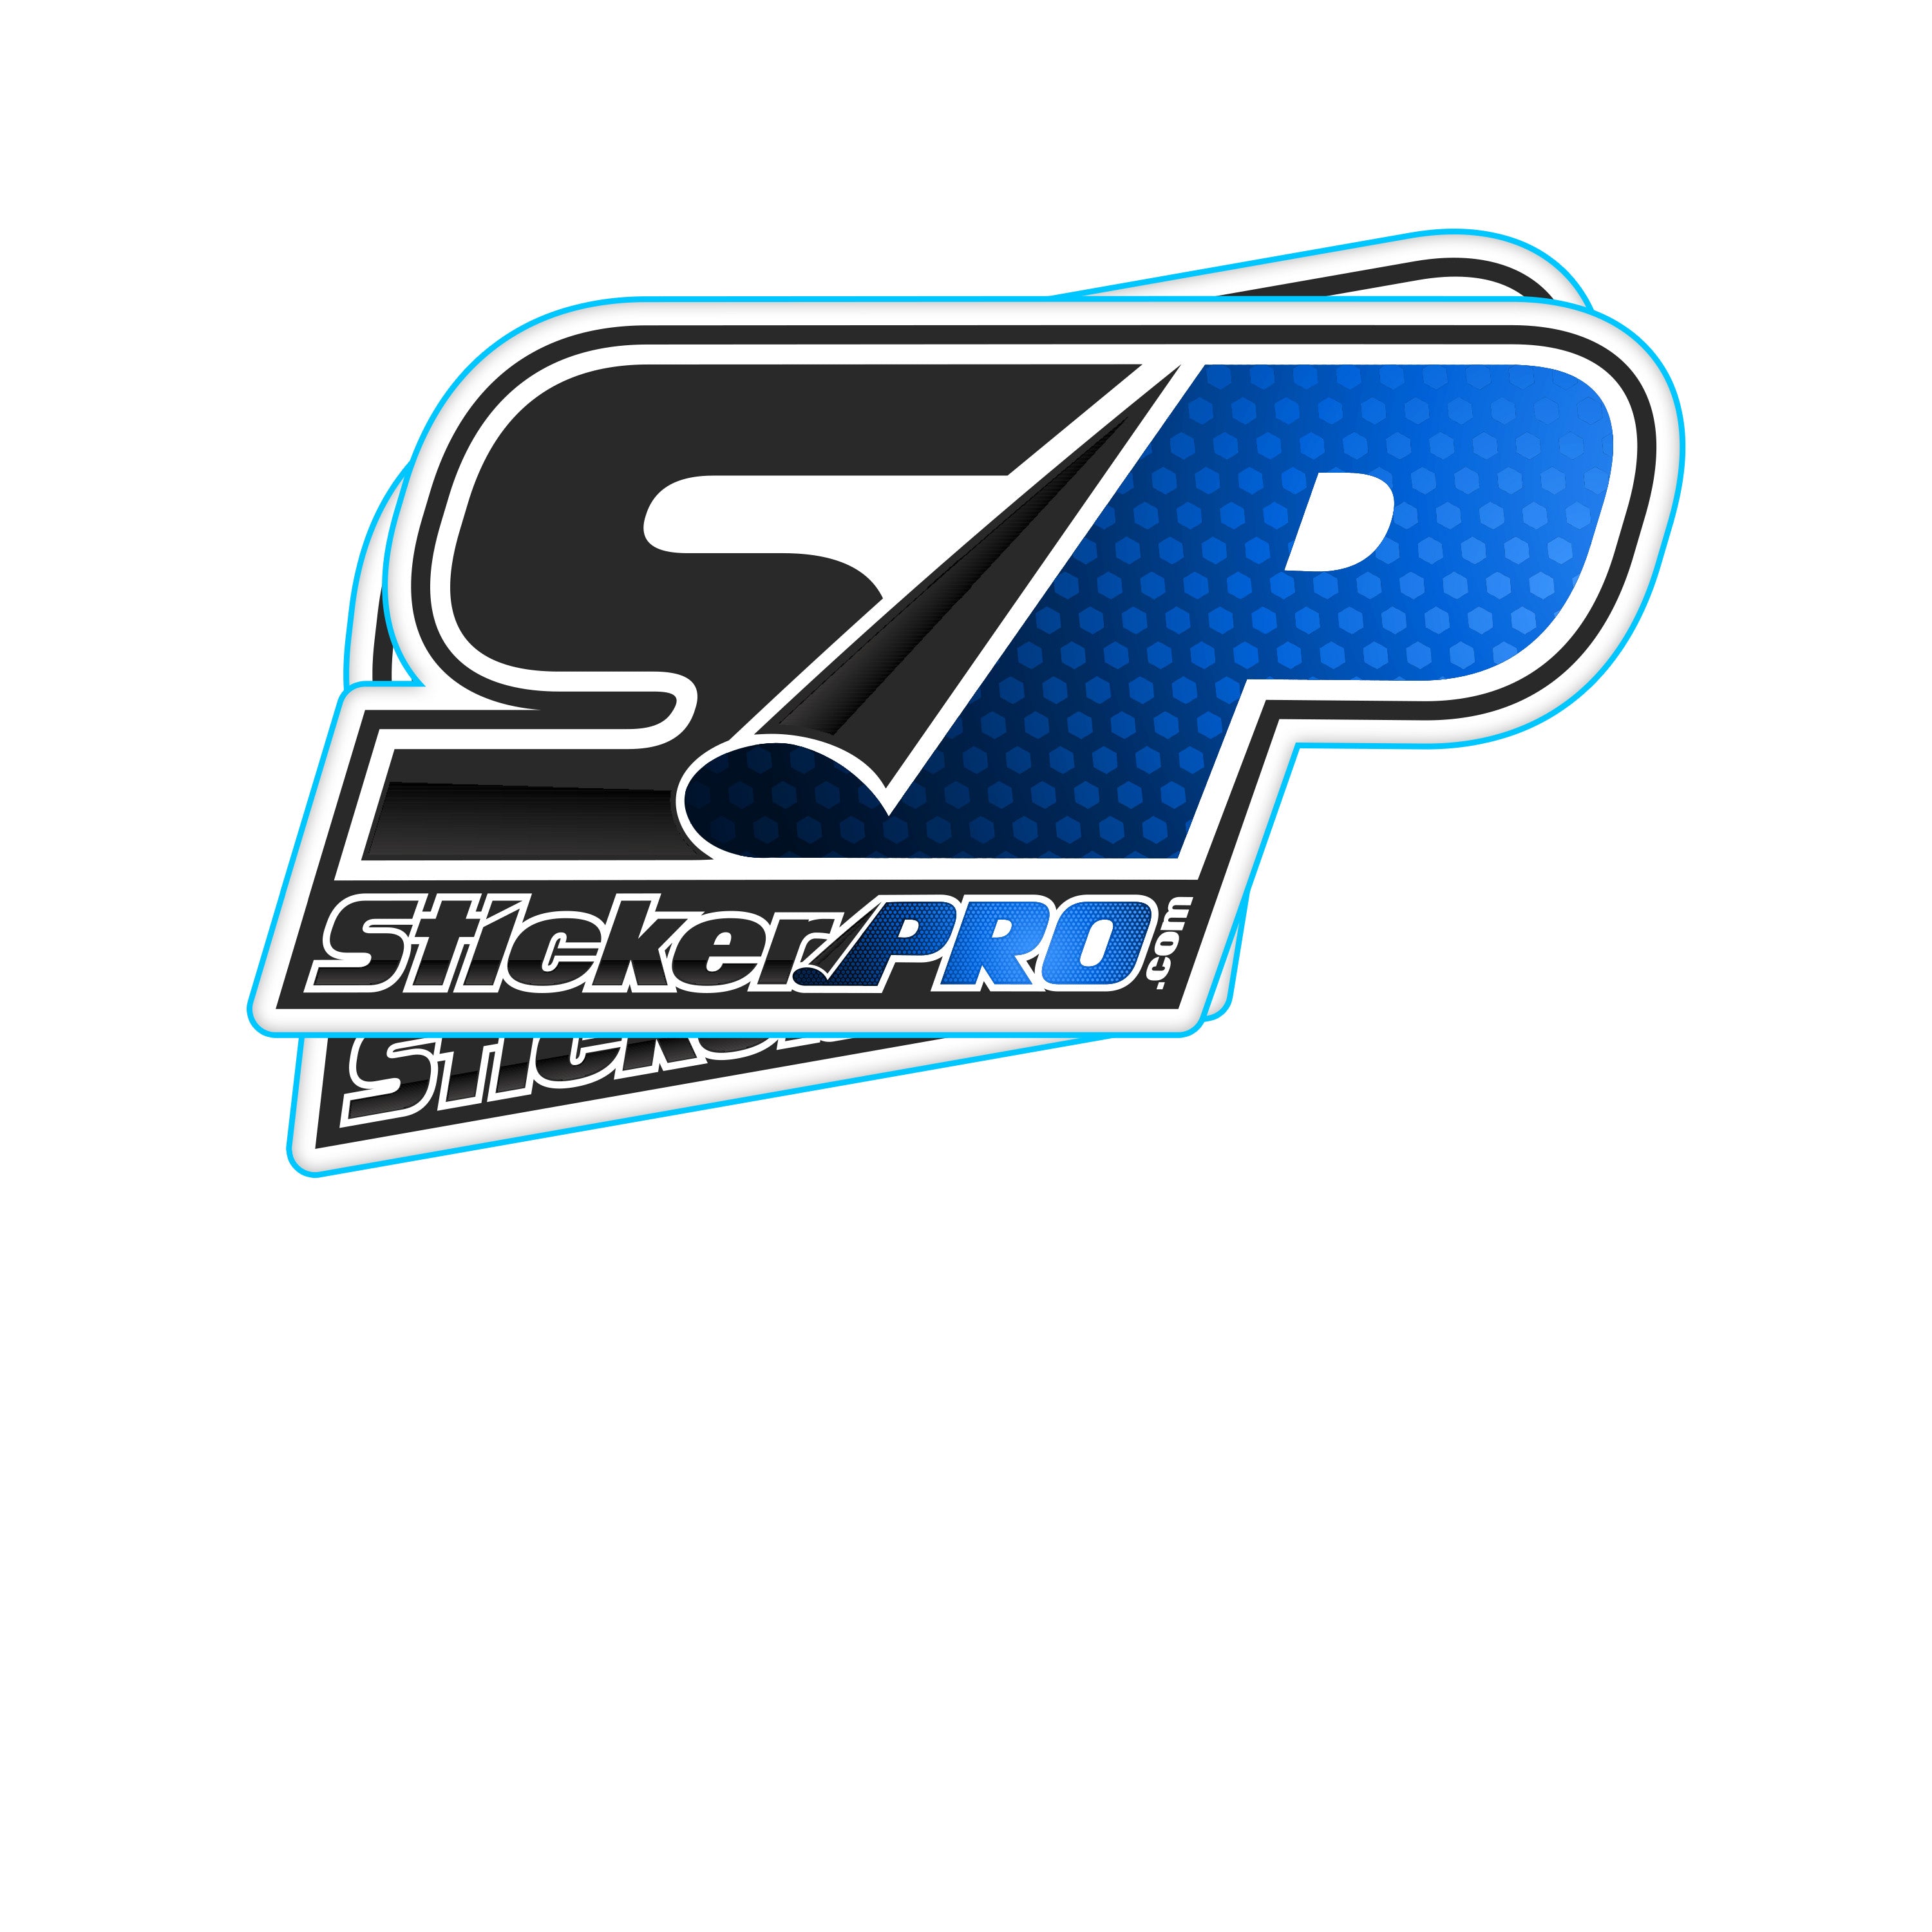 Sticker Pros - Sticker Pro USA - Quality Custom Stickers  - StickerPRO.com